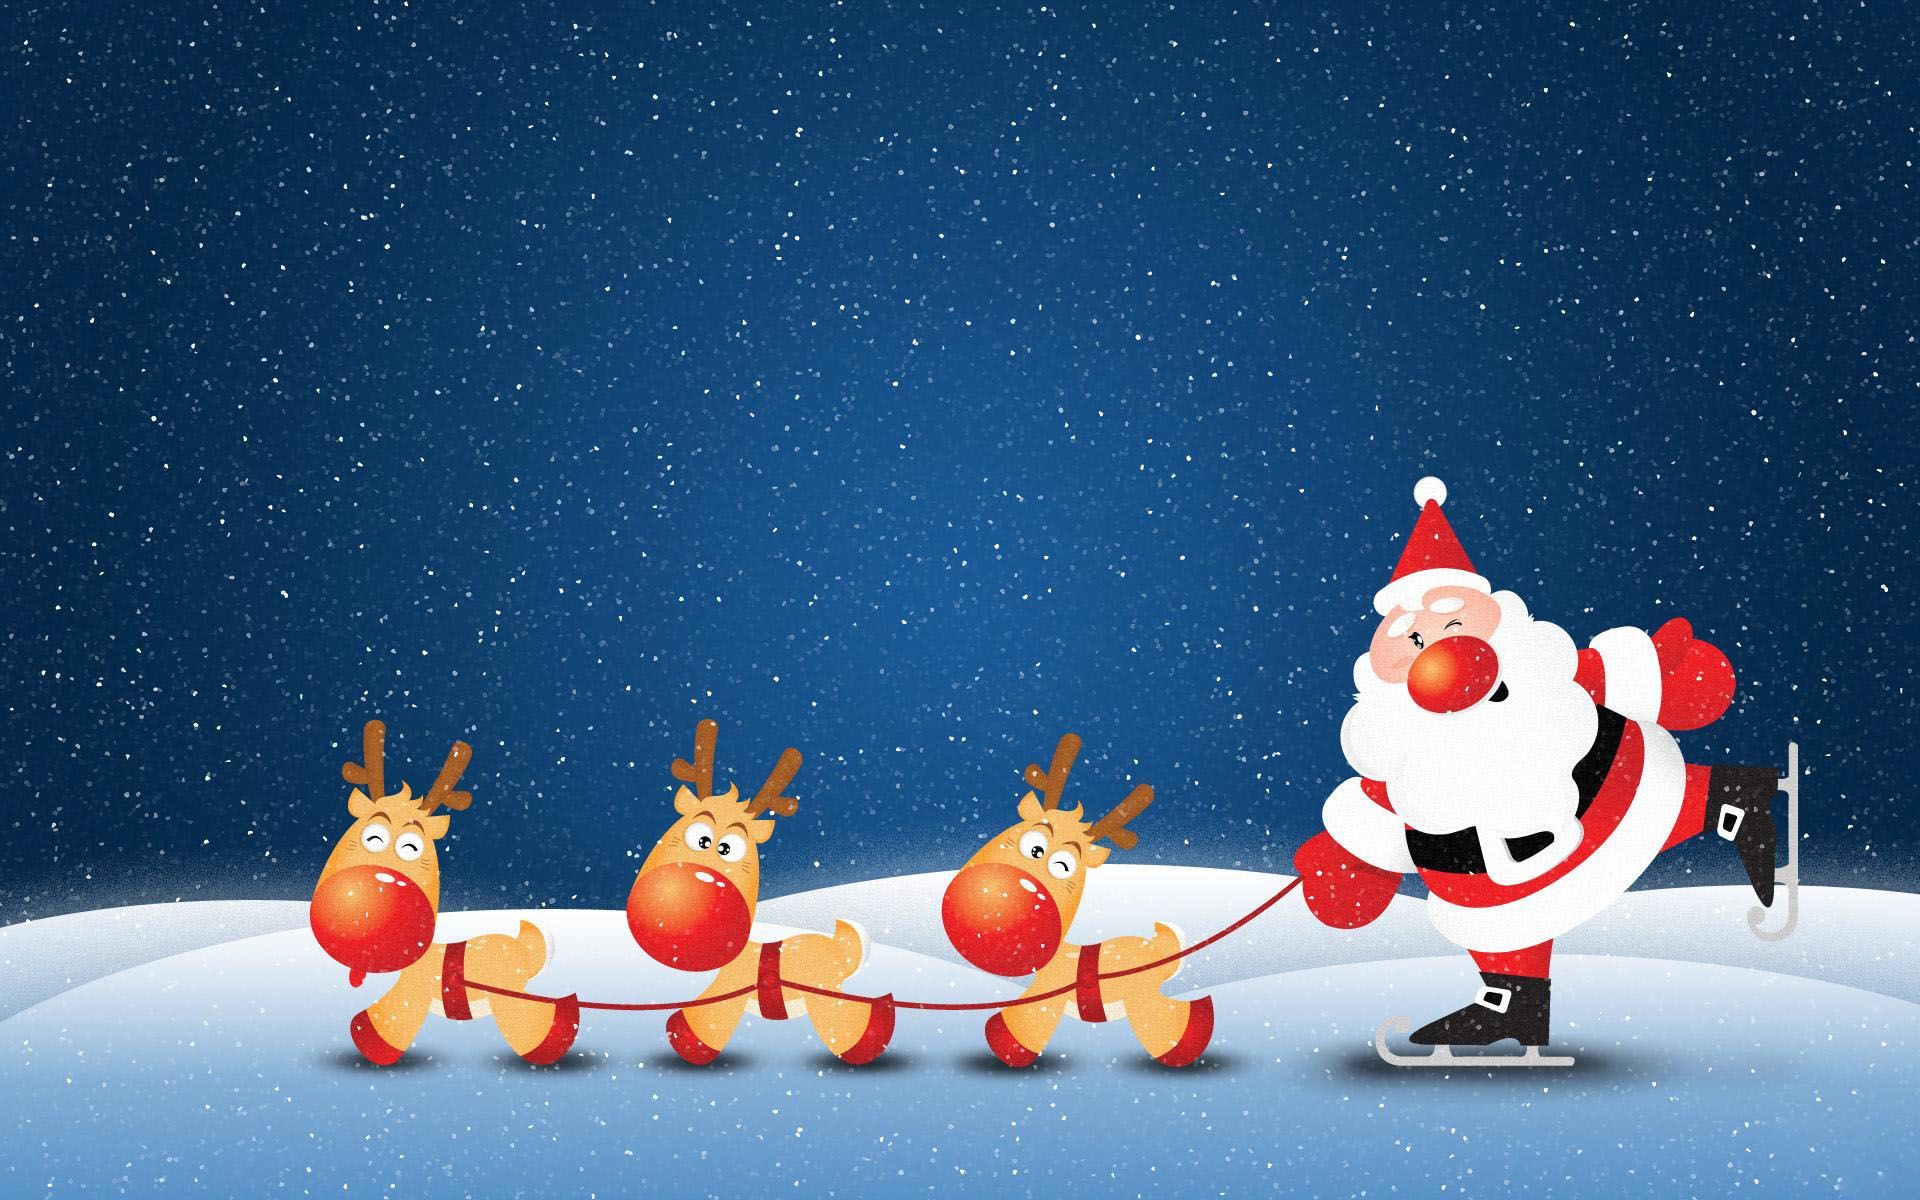 Cute Christmas Santa Wallpaper. Christmas cartoons, Christmas desktop wallpaper, Christmas wallpaper free